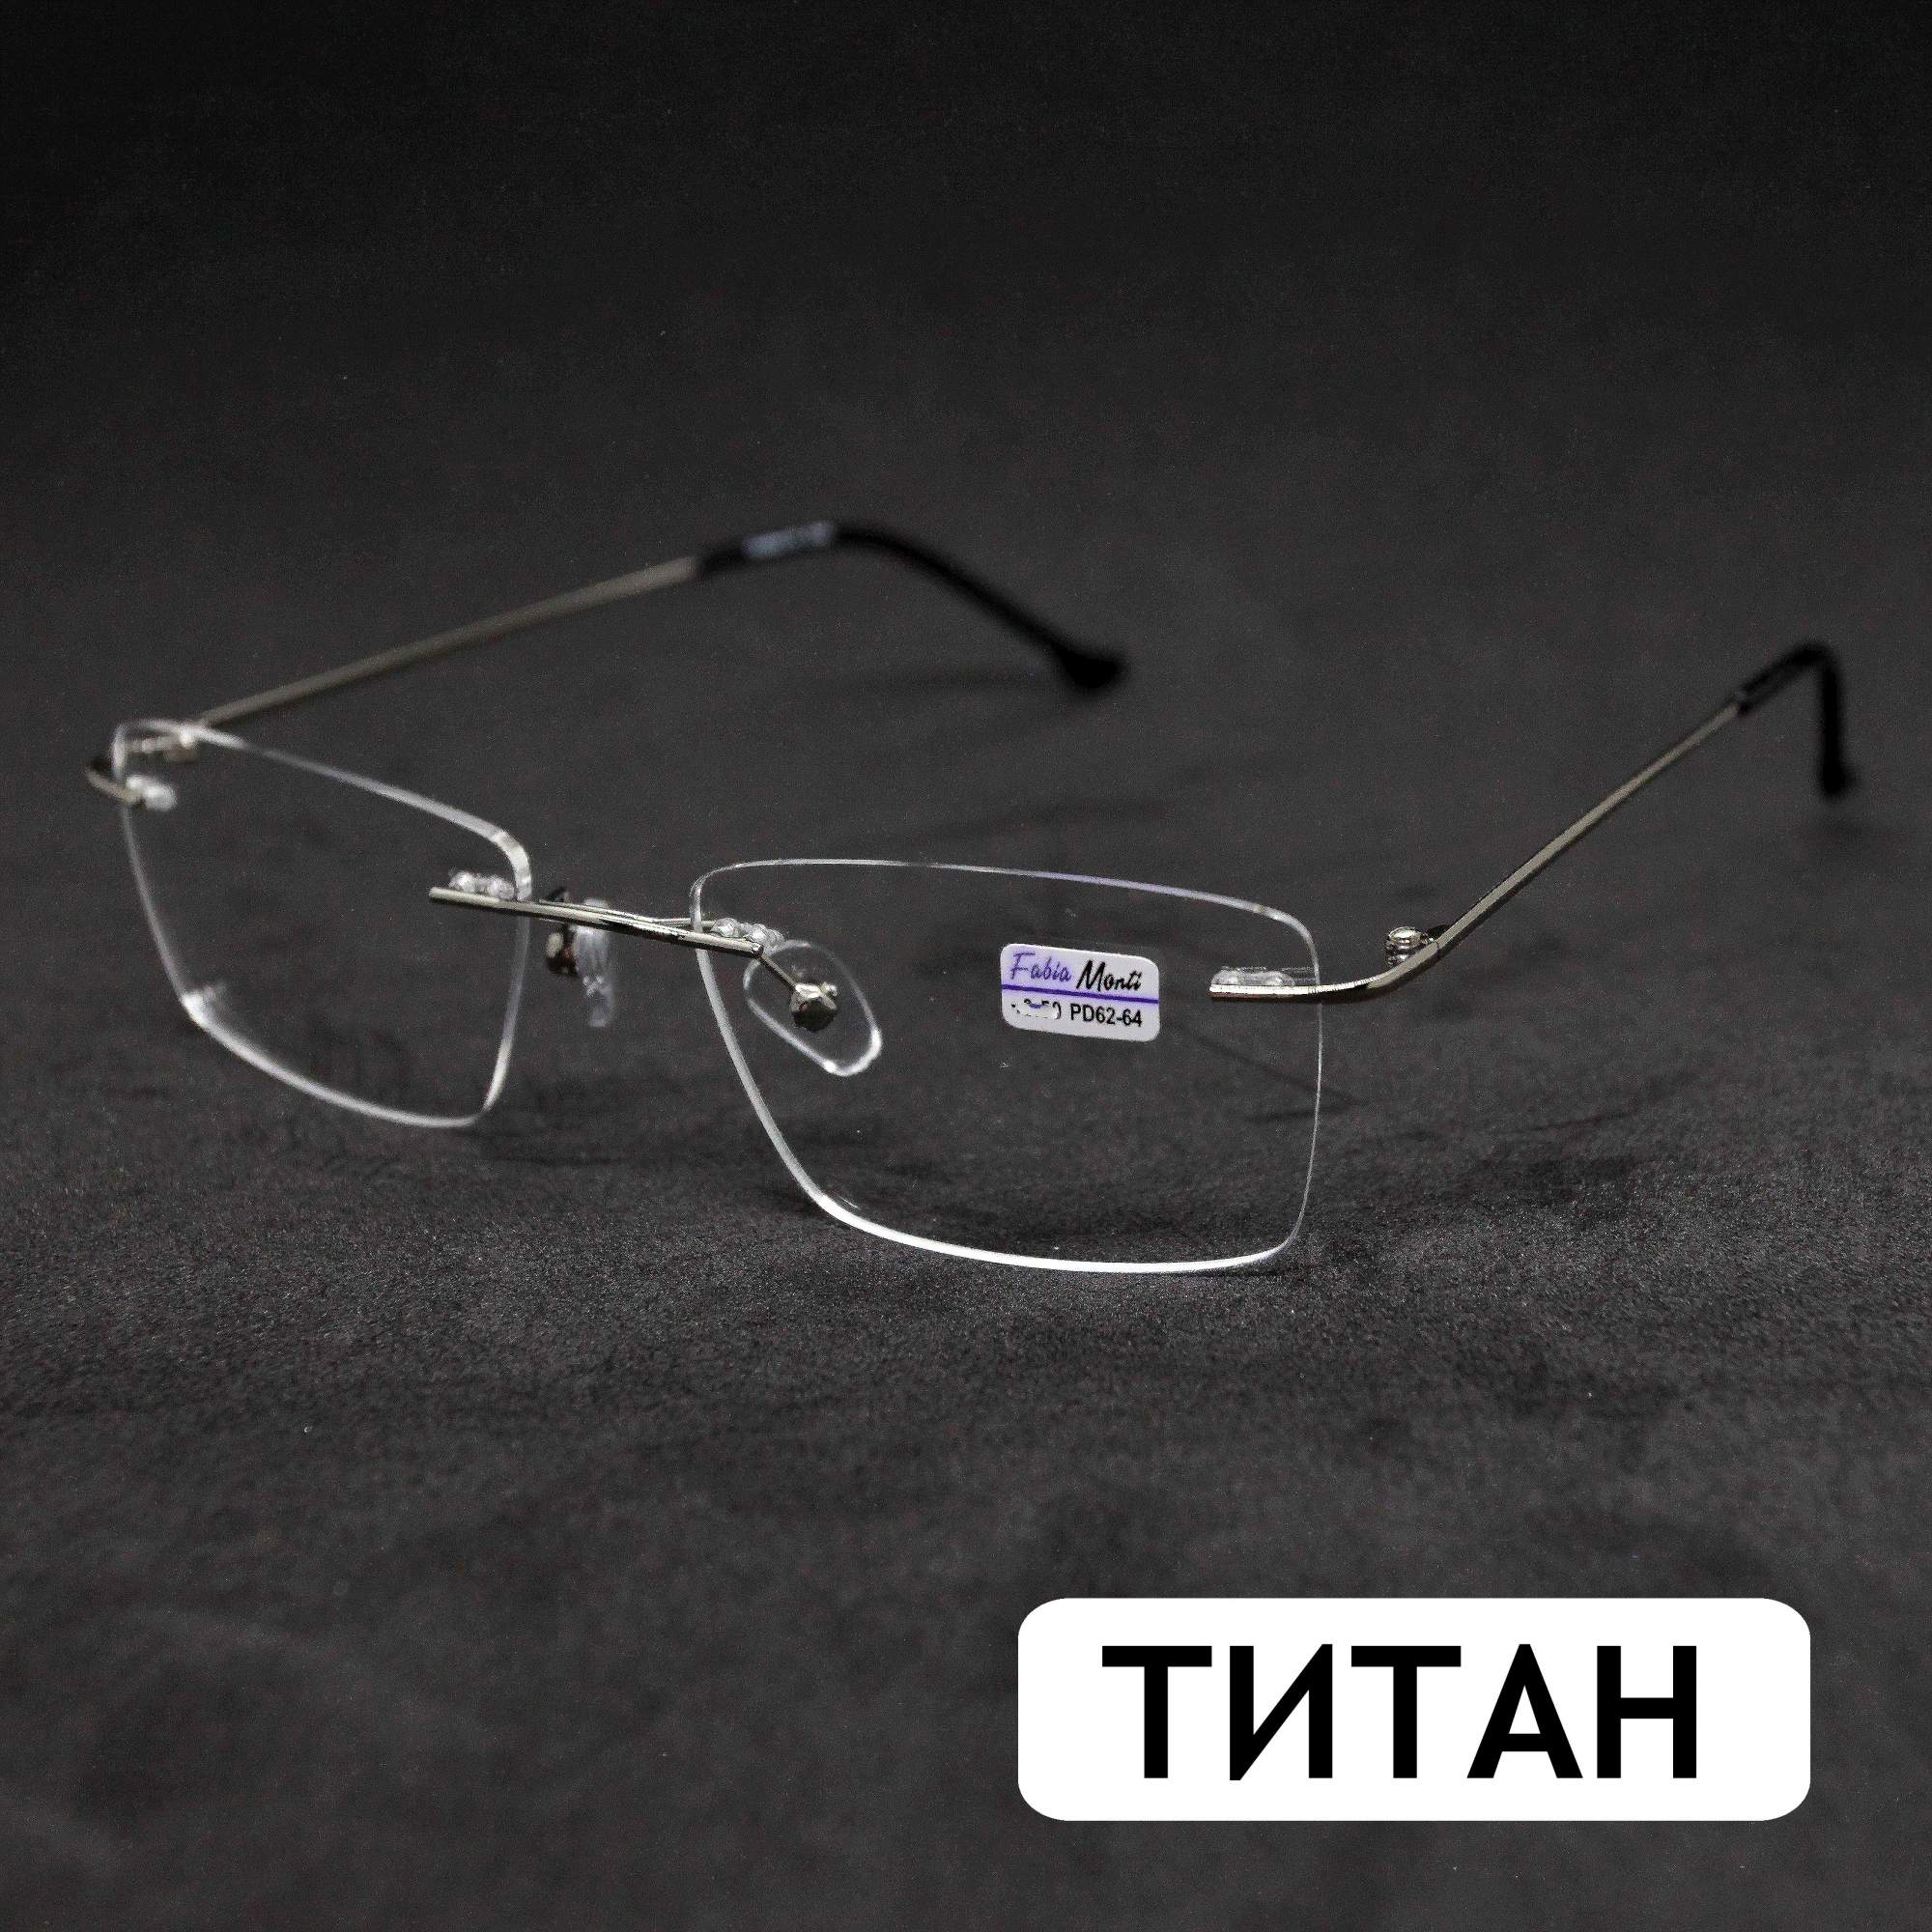 Безободковые очки FM 8959 -2.00, без футляра, оправа титан, серые, РЦ 62-64